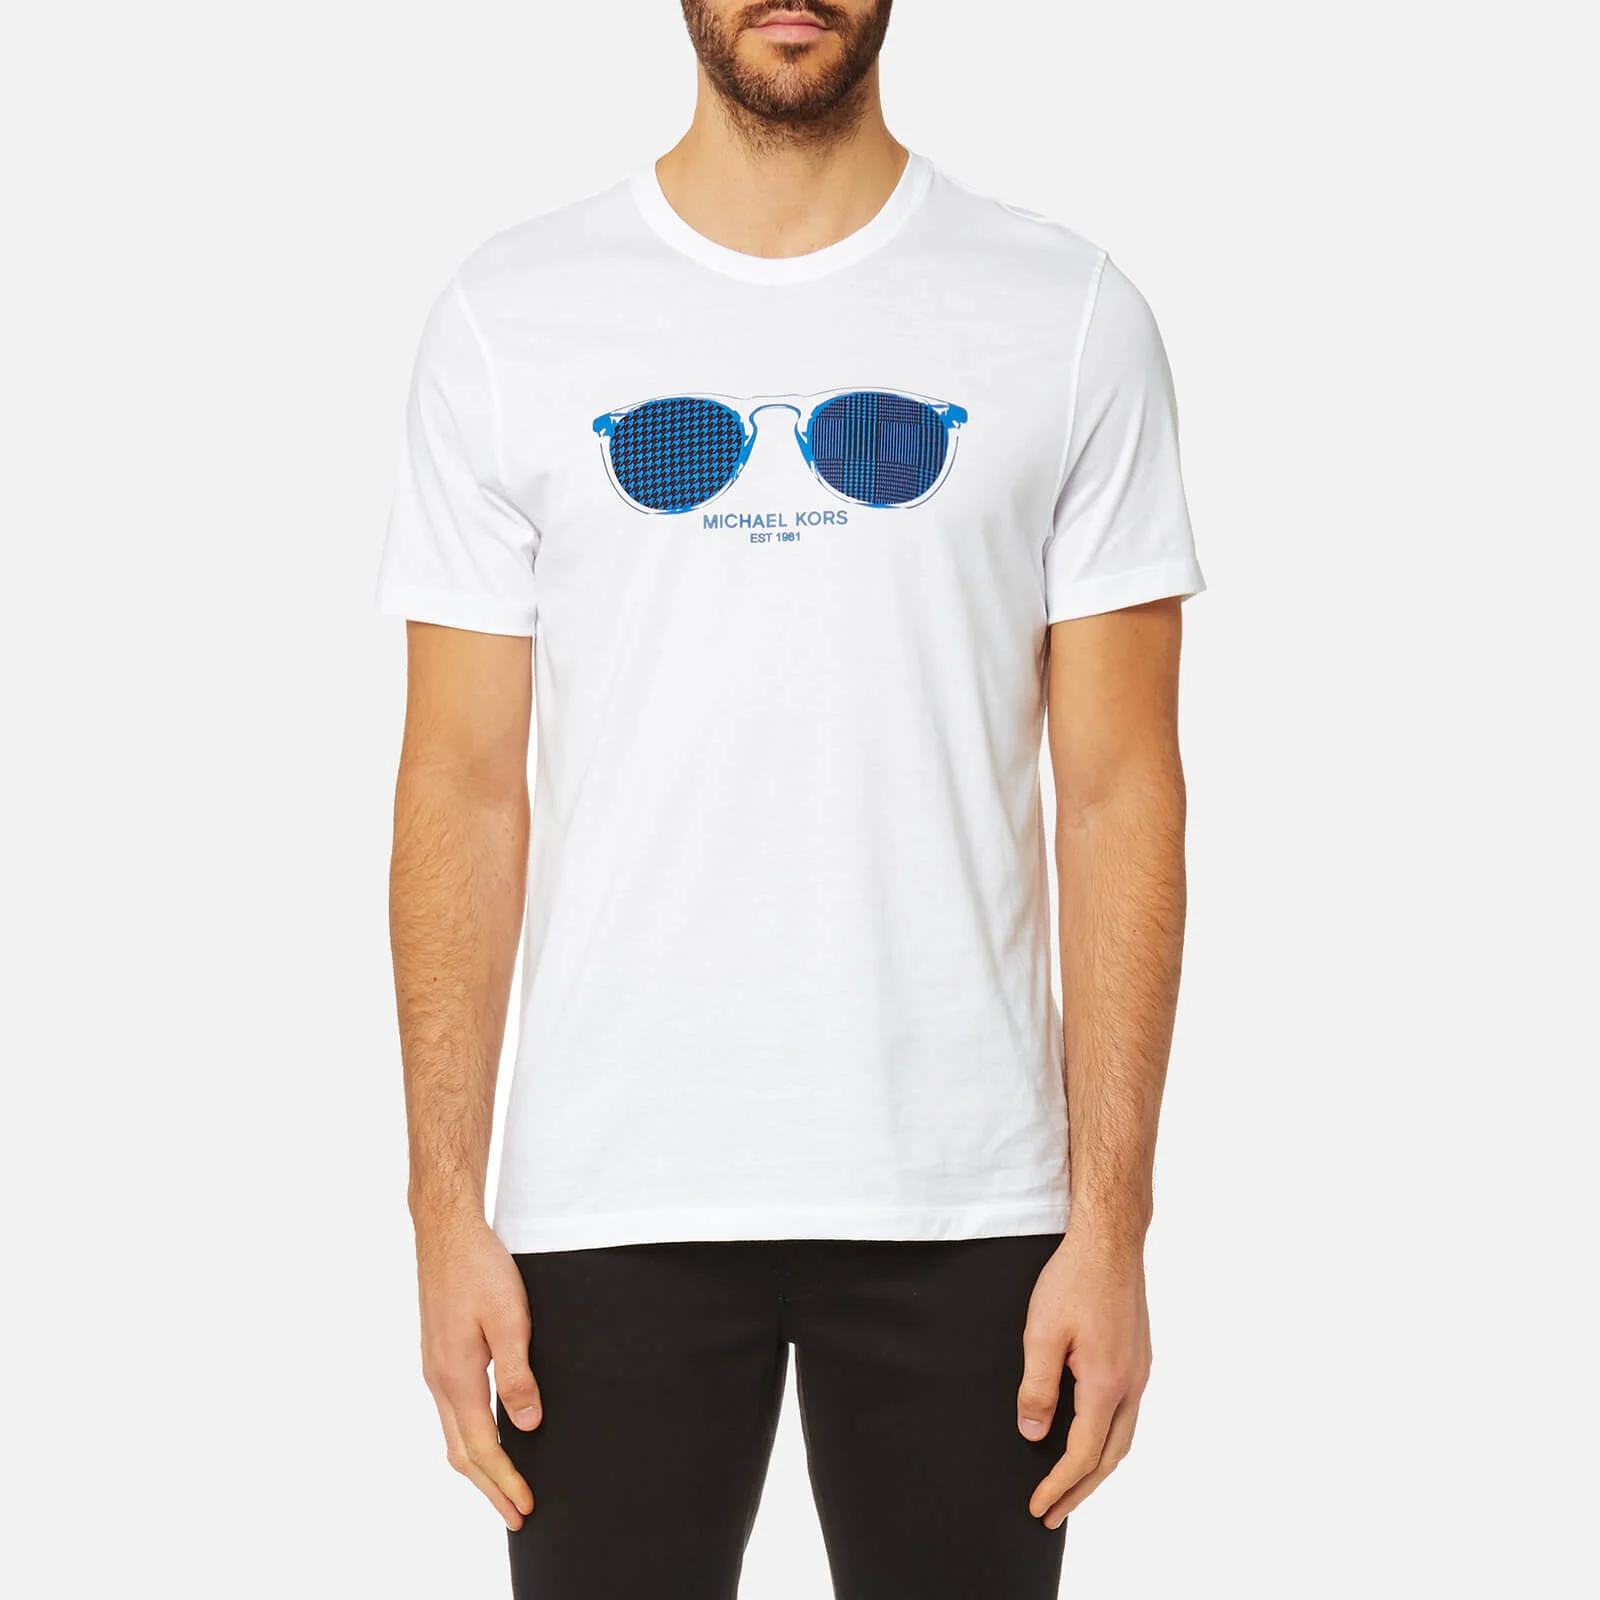 Michael Kors Men's Houndstooth Aviator Graphic T-Shirt - White Image 1